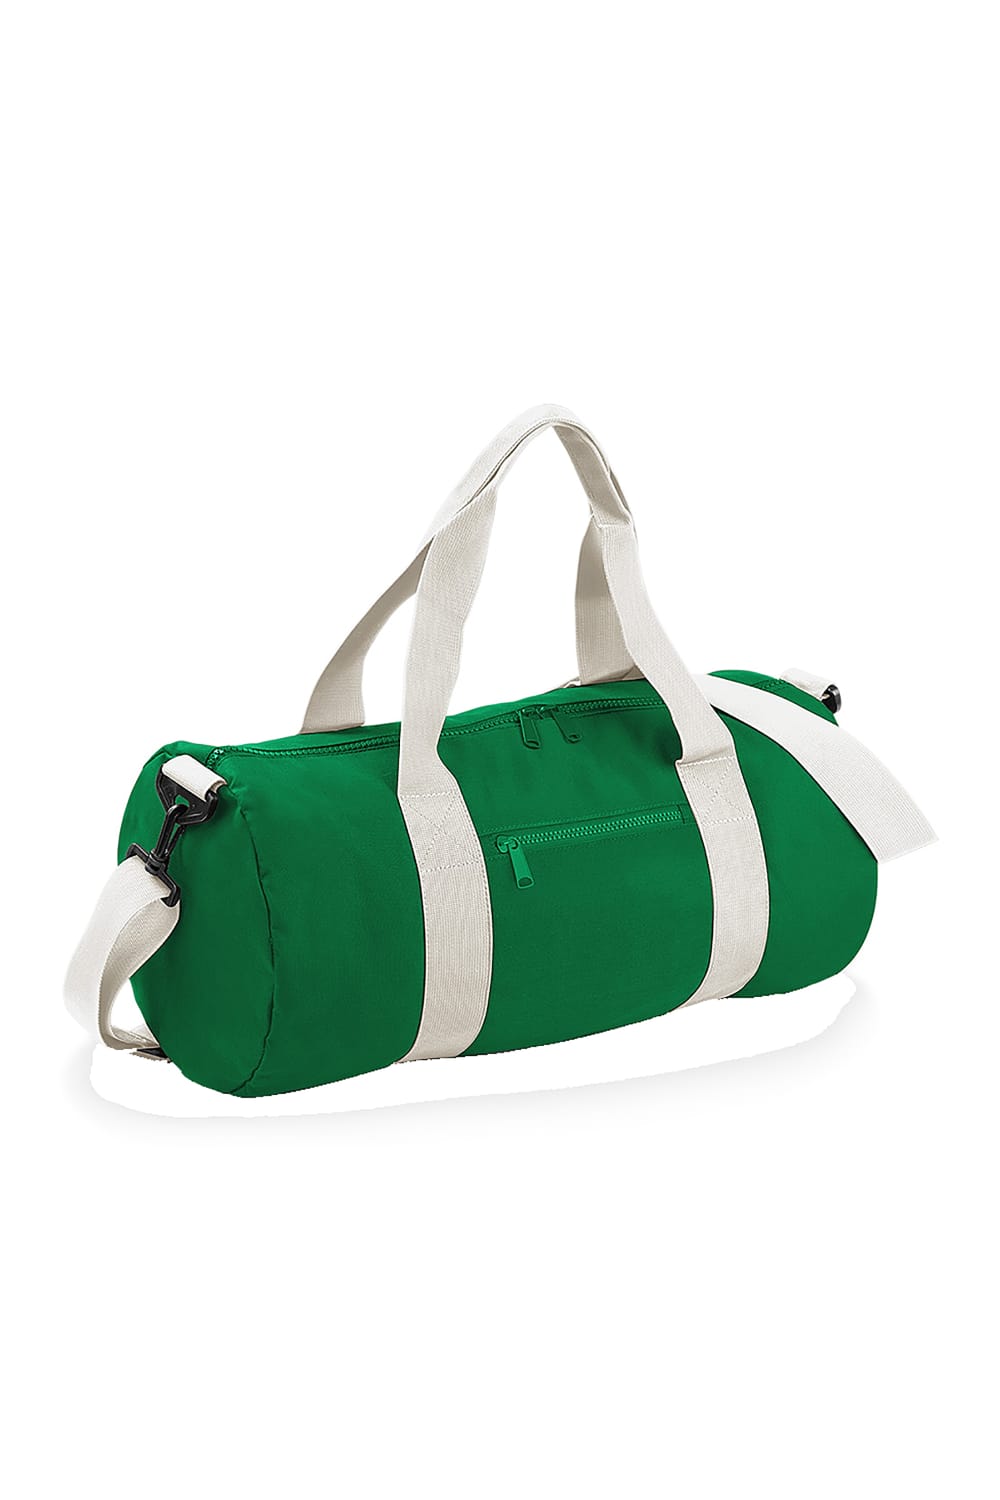 Bagbase Plain Varsity Barrel/Duffel Bag (20 Liters) (Kelly Green/Off White) (One Size)